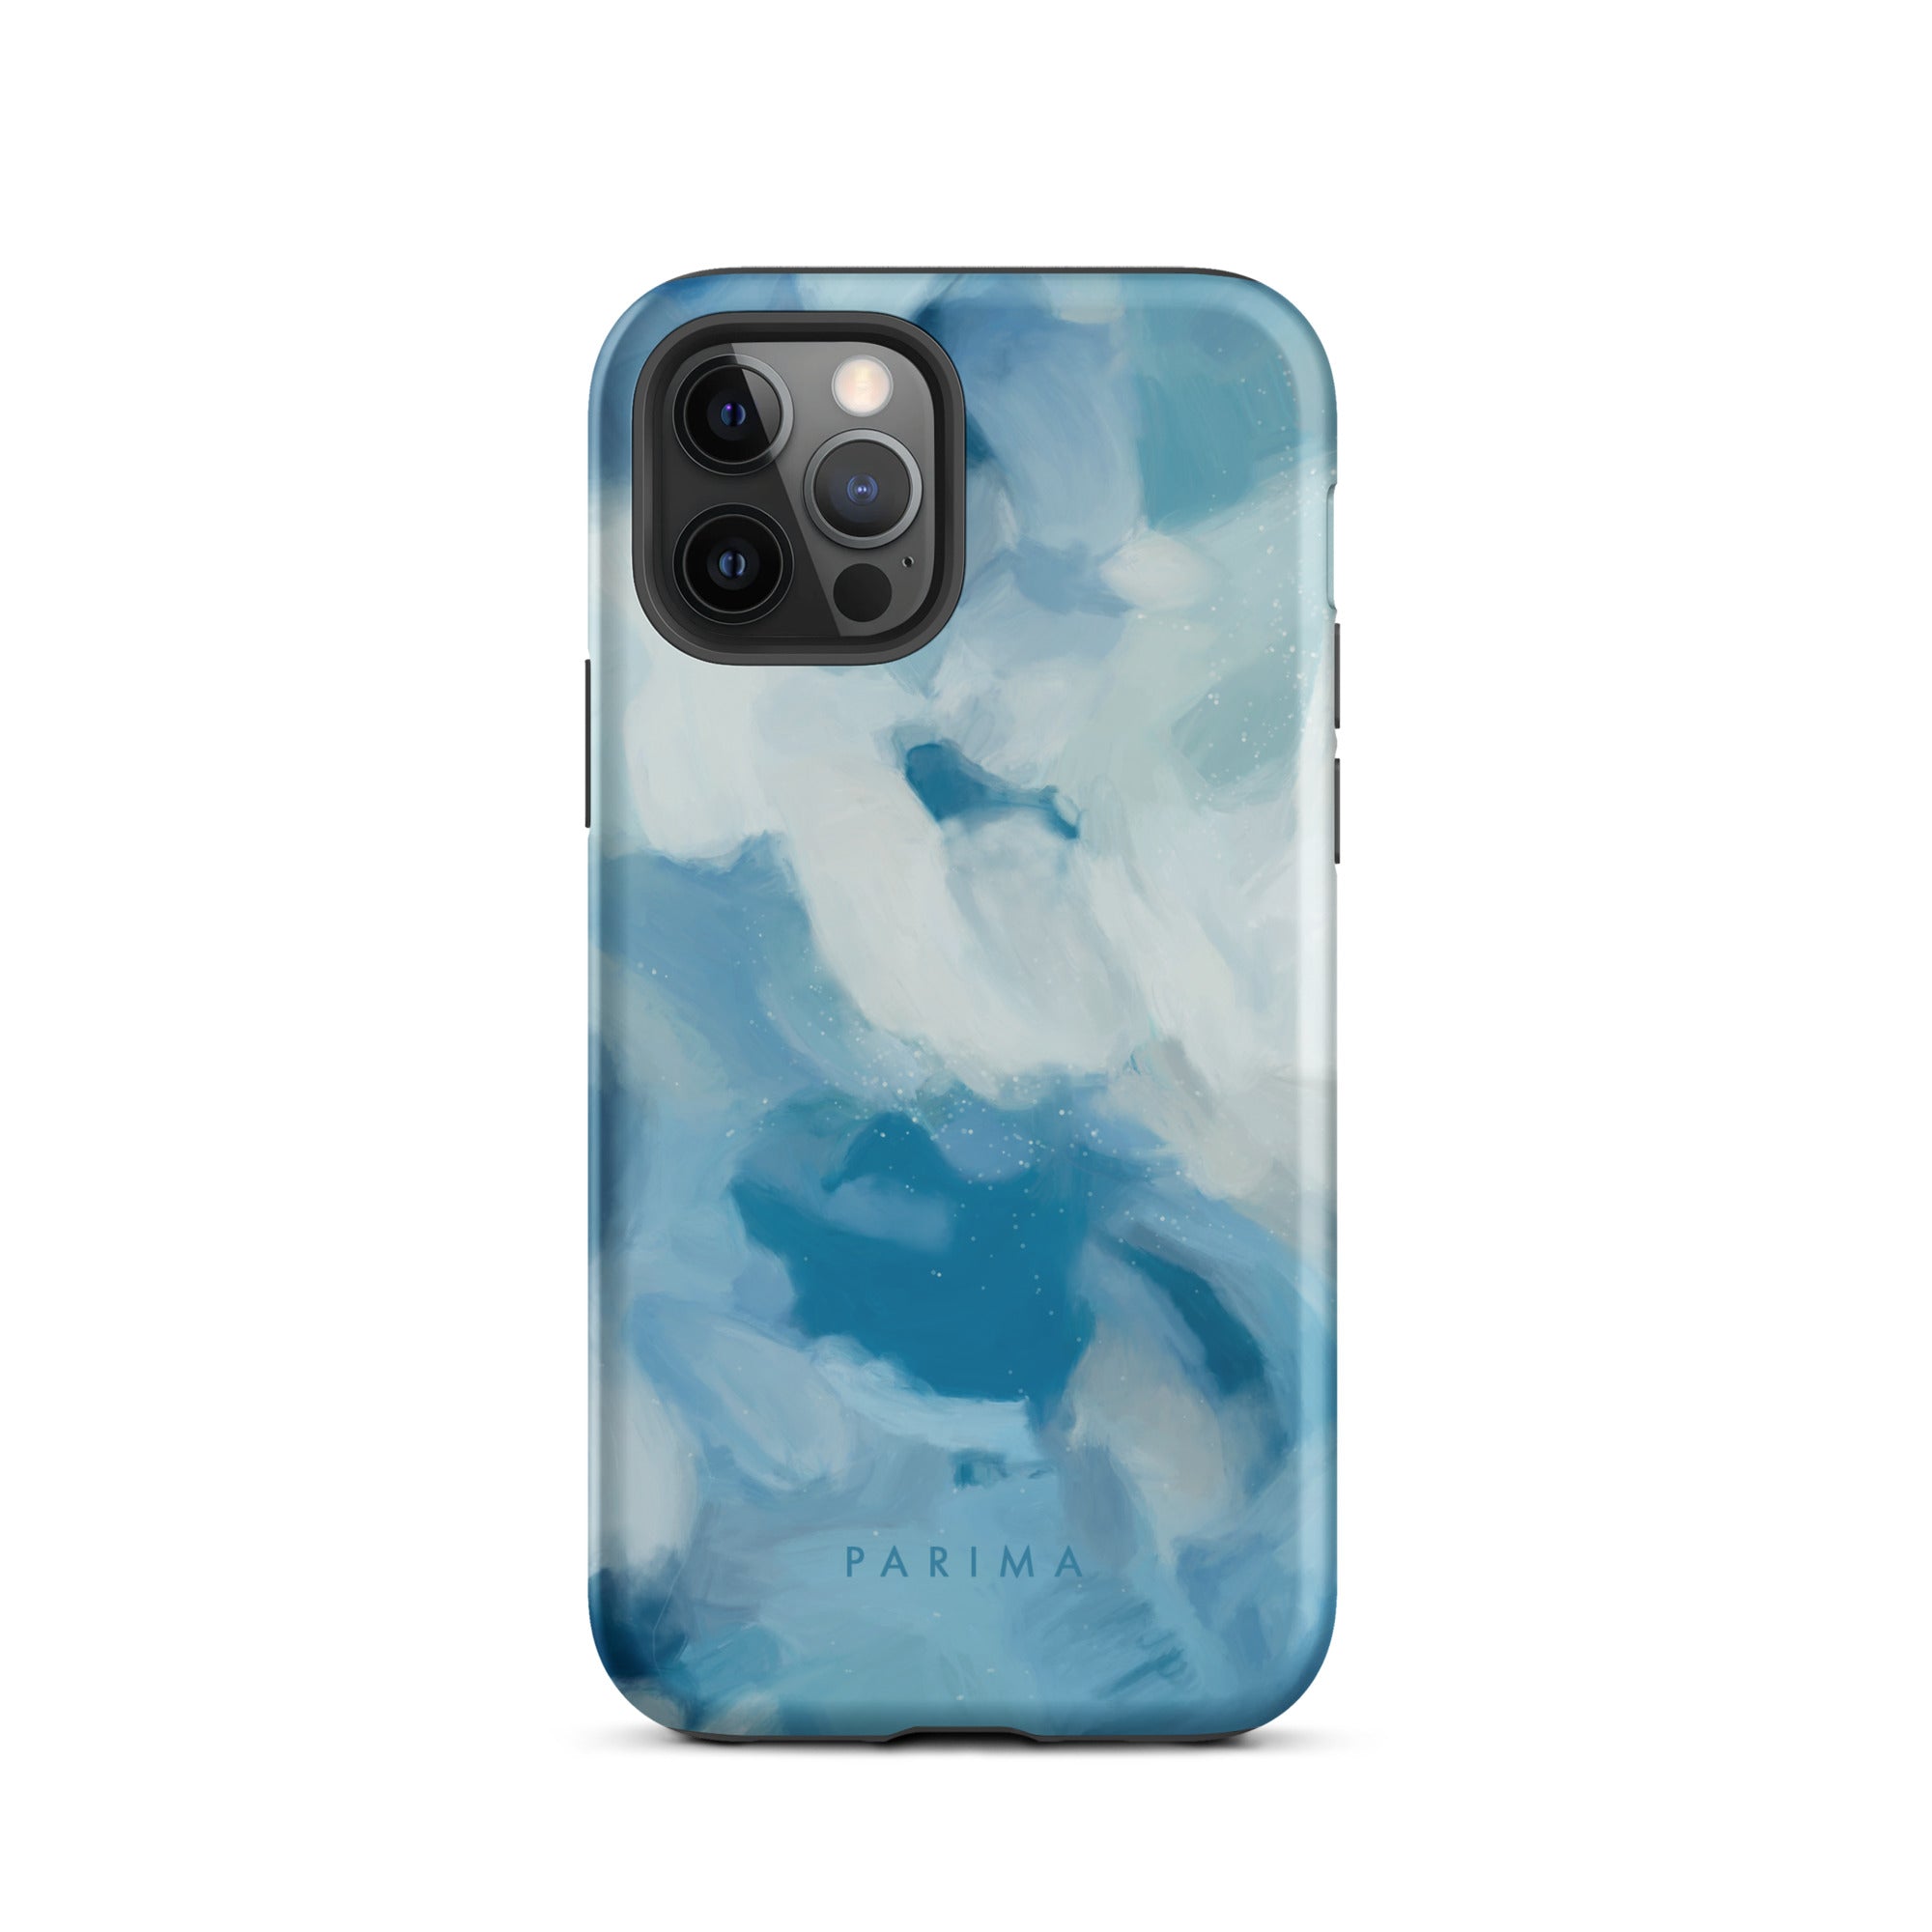 Liviana, blue abstract art - iPhone 12 Pro tough case by Parima Studio